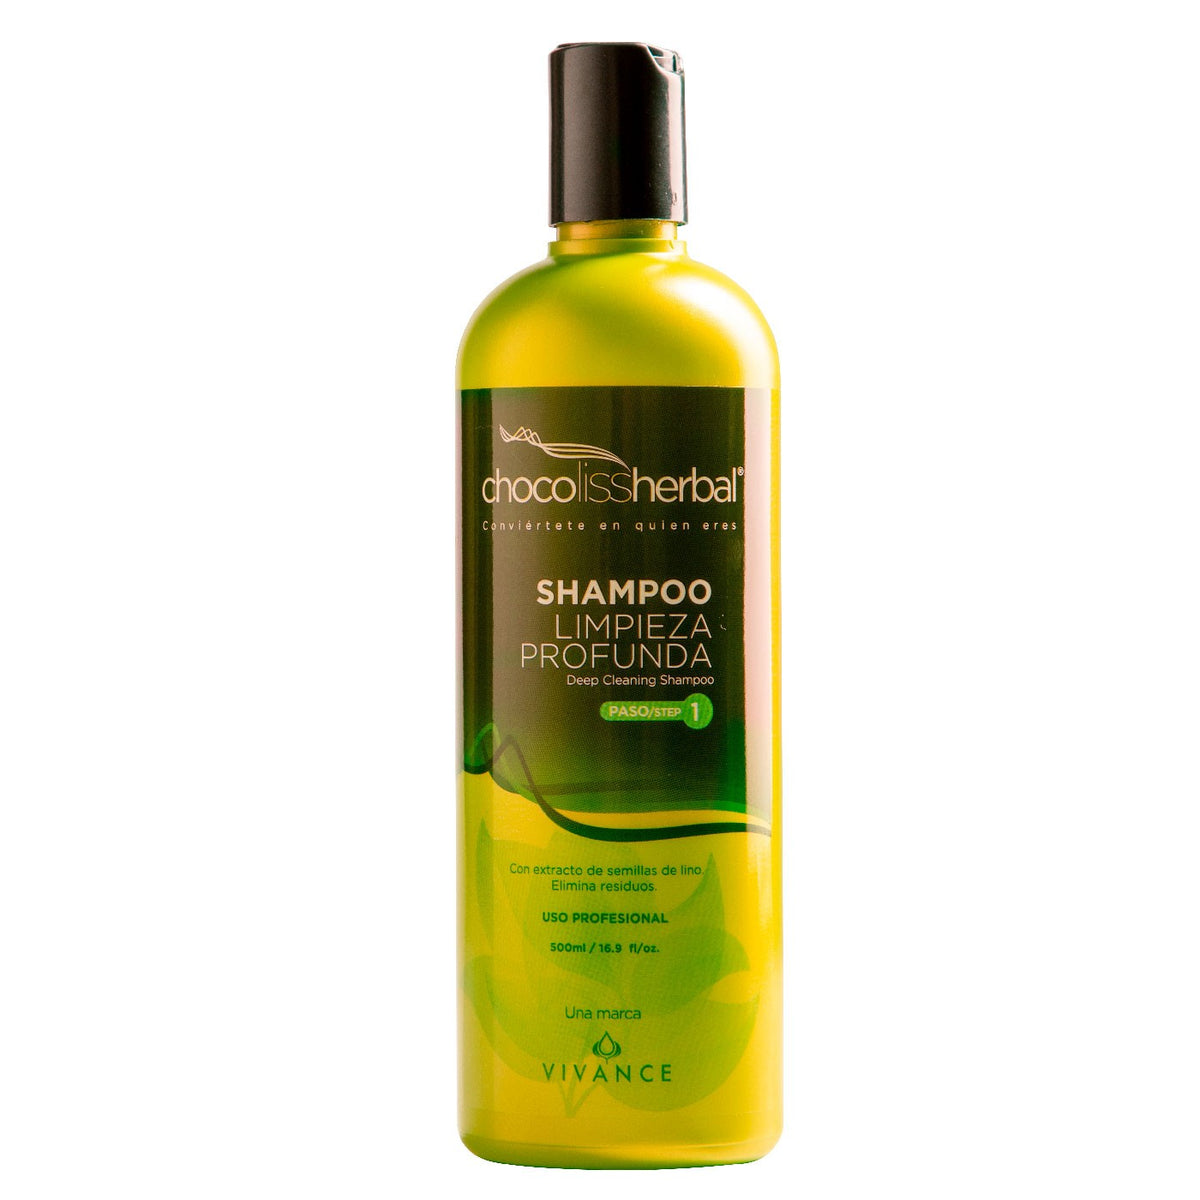 Shampoo Limpieza Profunda Paso 1 Chocoliss Herbal